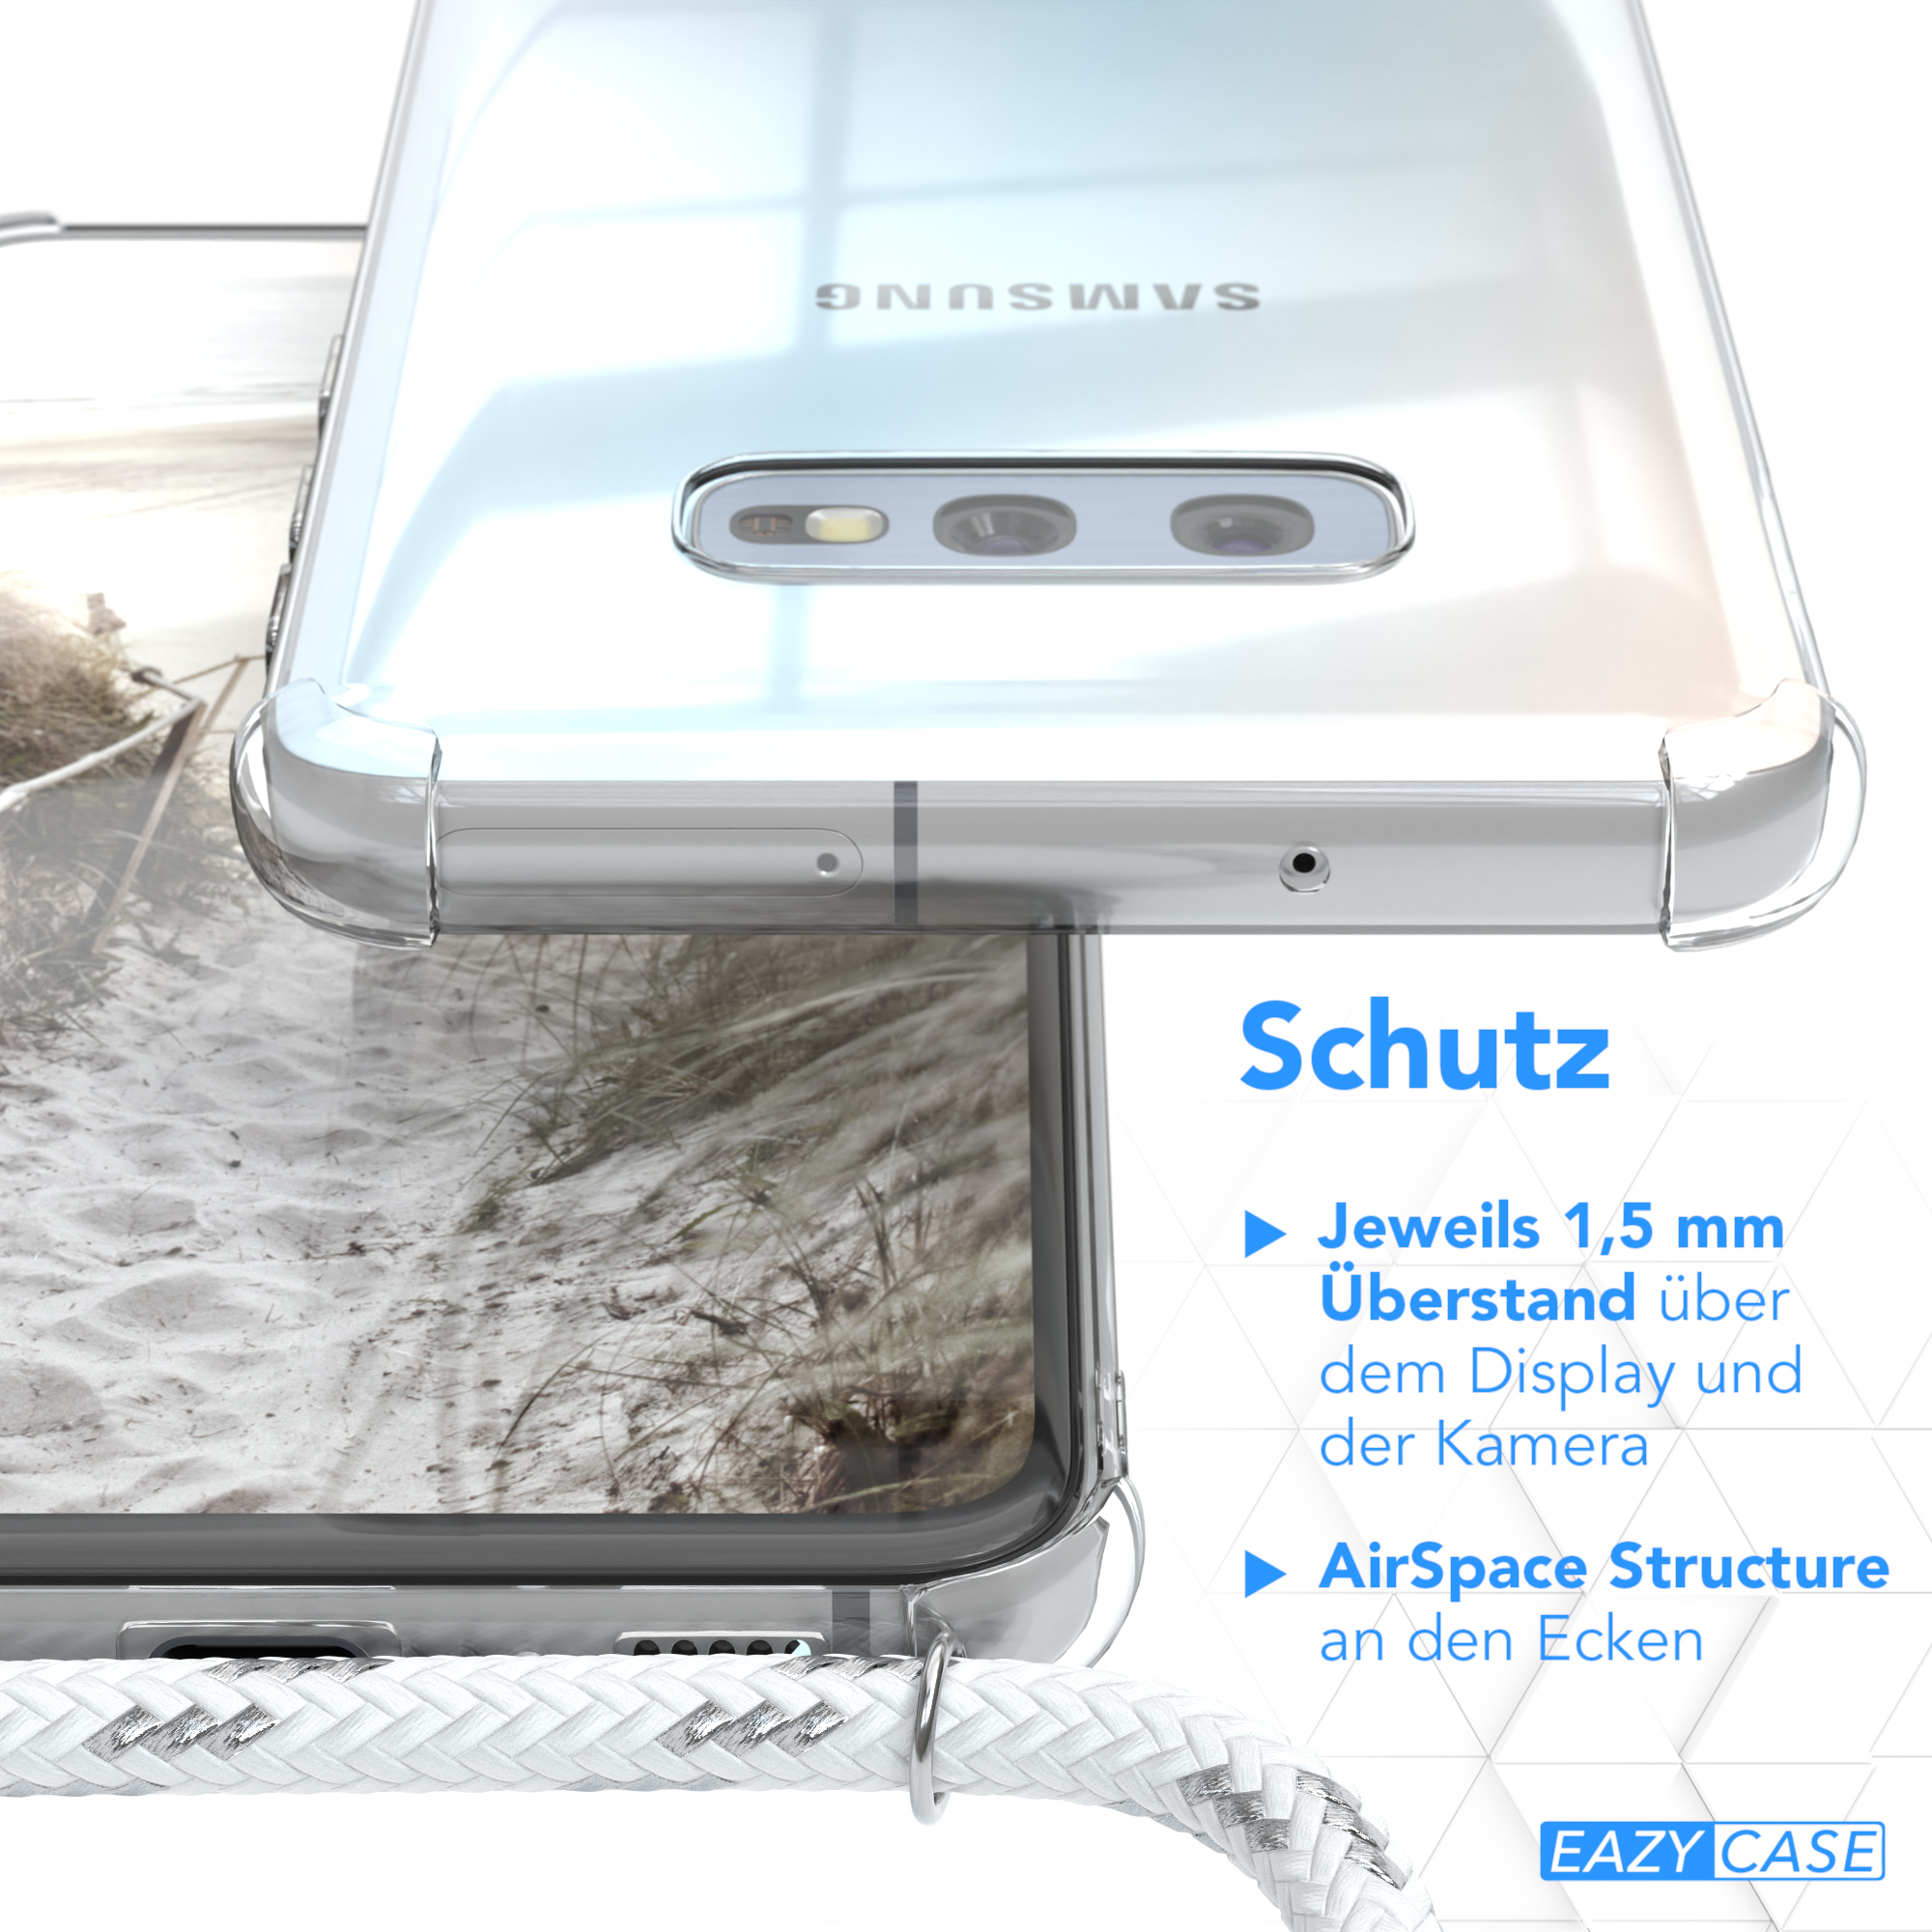 CASE Clear S10e, Silber Weiß Umhängeband, EAZY Galaxy Clips Samsung, mit Cover Umhängetasche, /